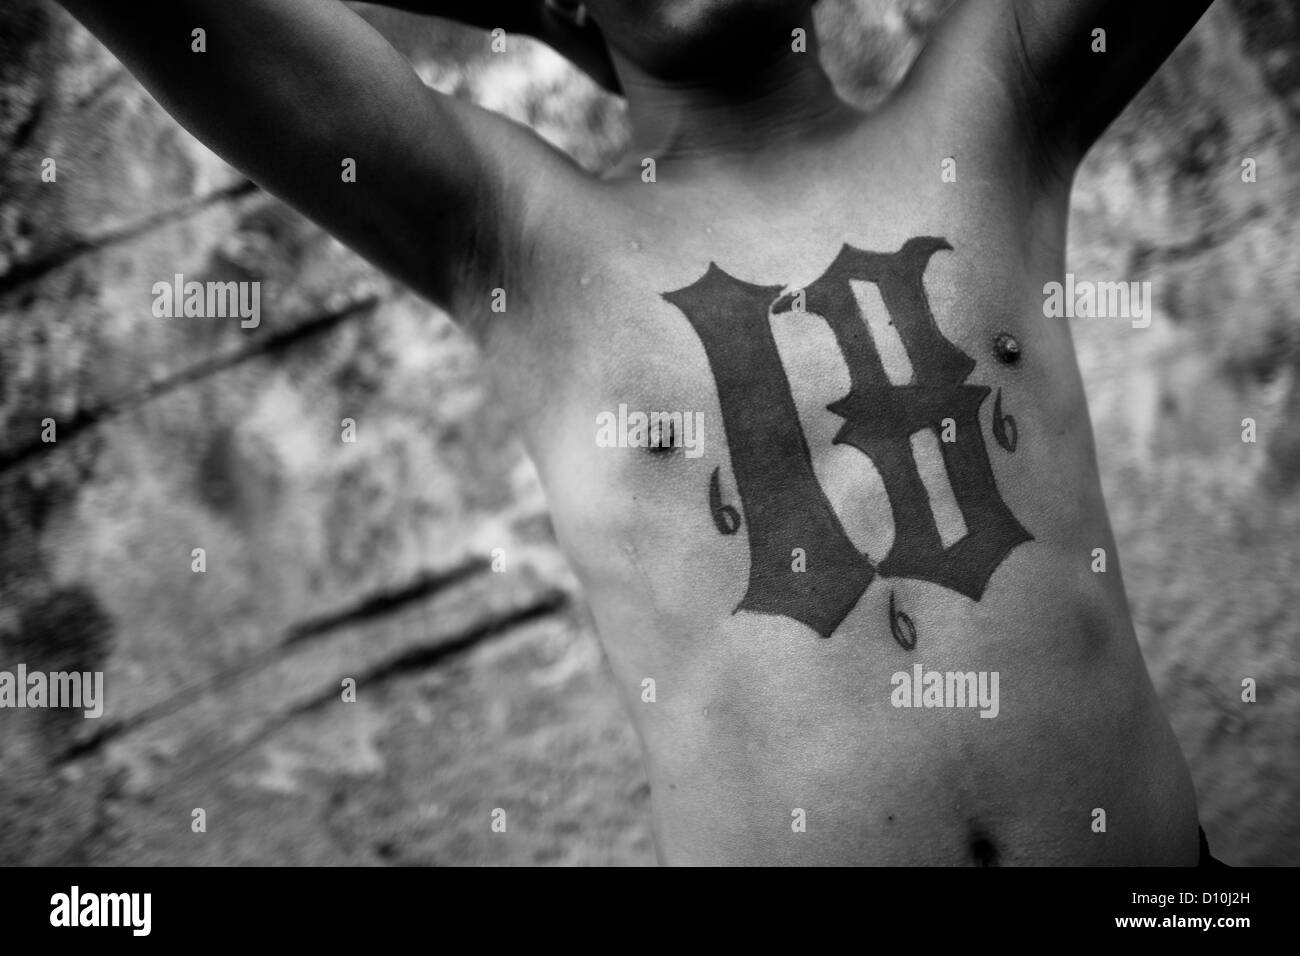 A member of the 18th Street Gang (M-18) shows off his gang tattoos in San Salvador, El Salvador. Stock Photo